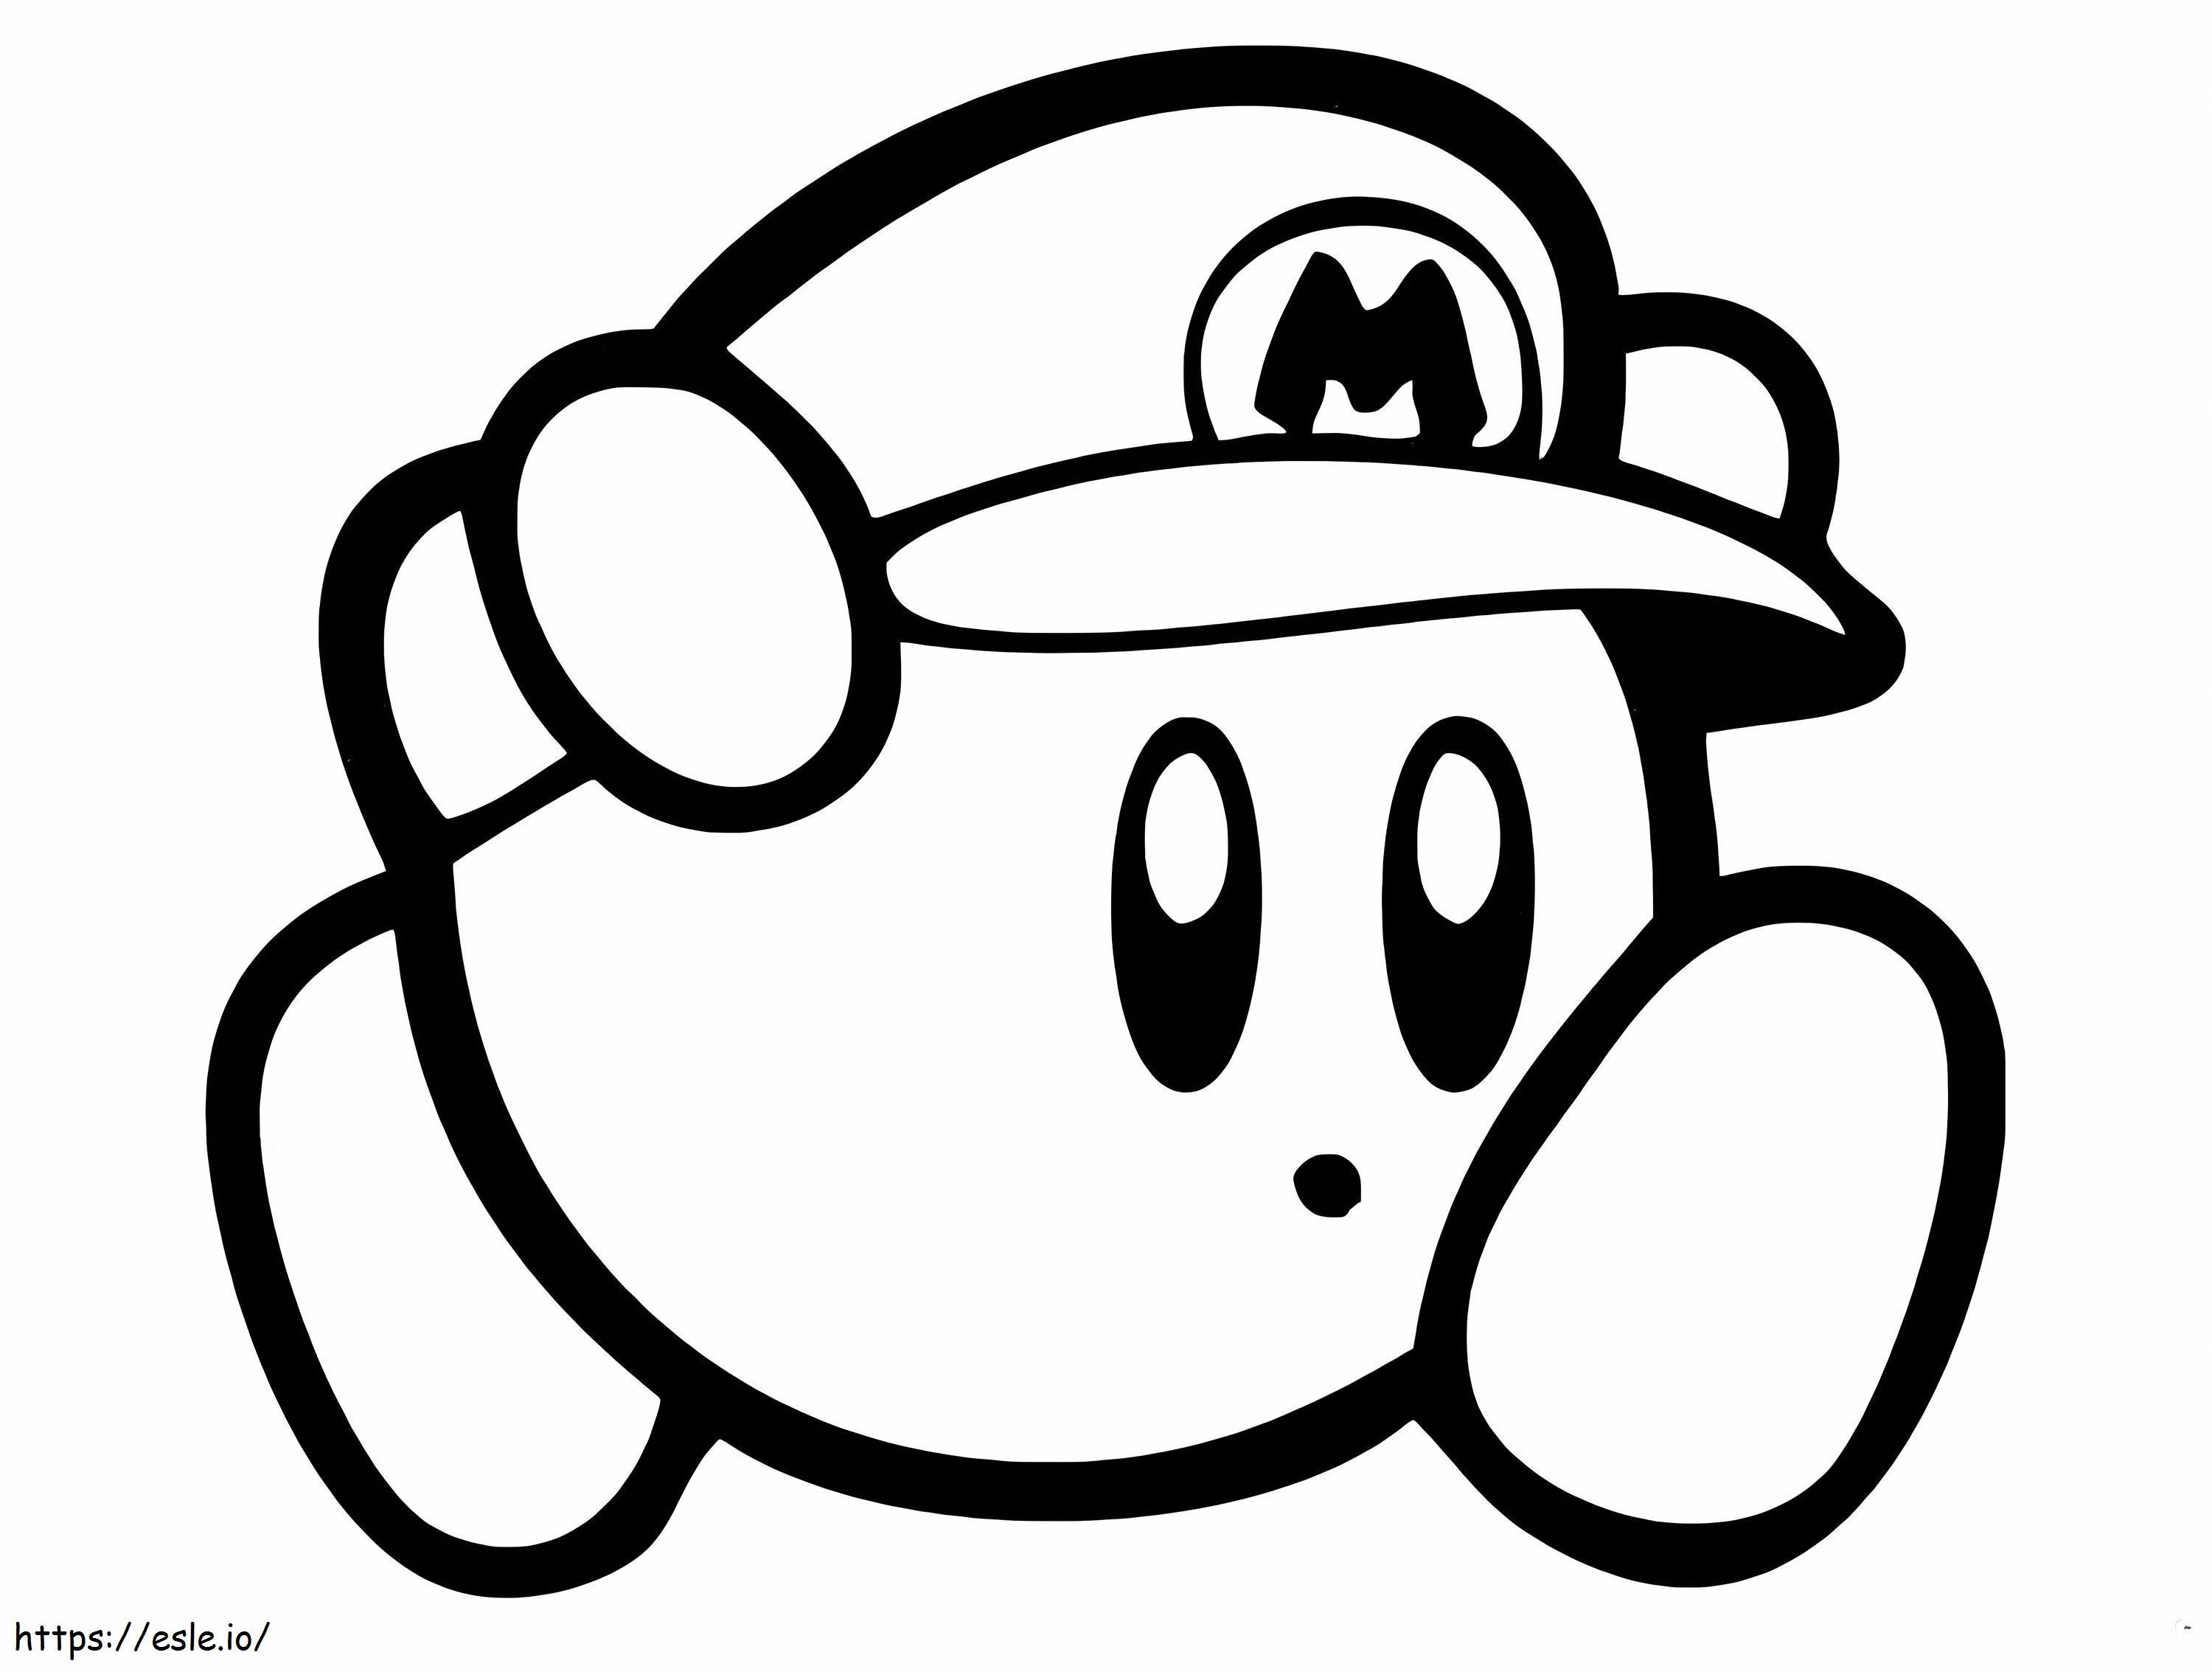 Kirby correndo para colorir